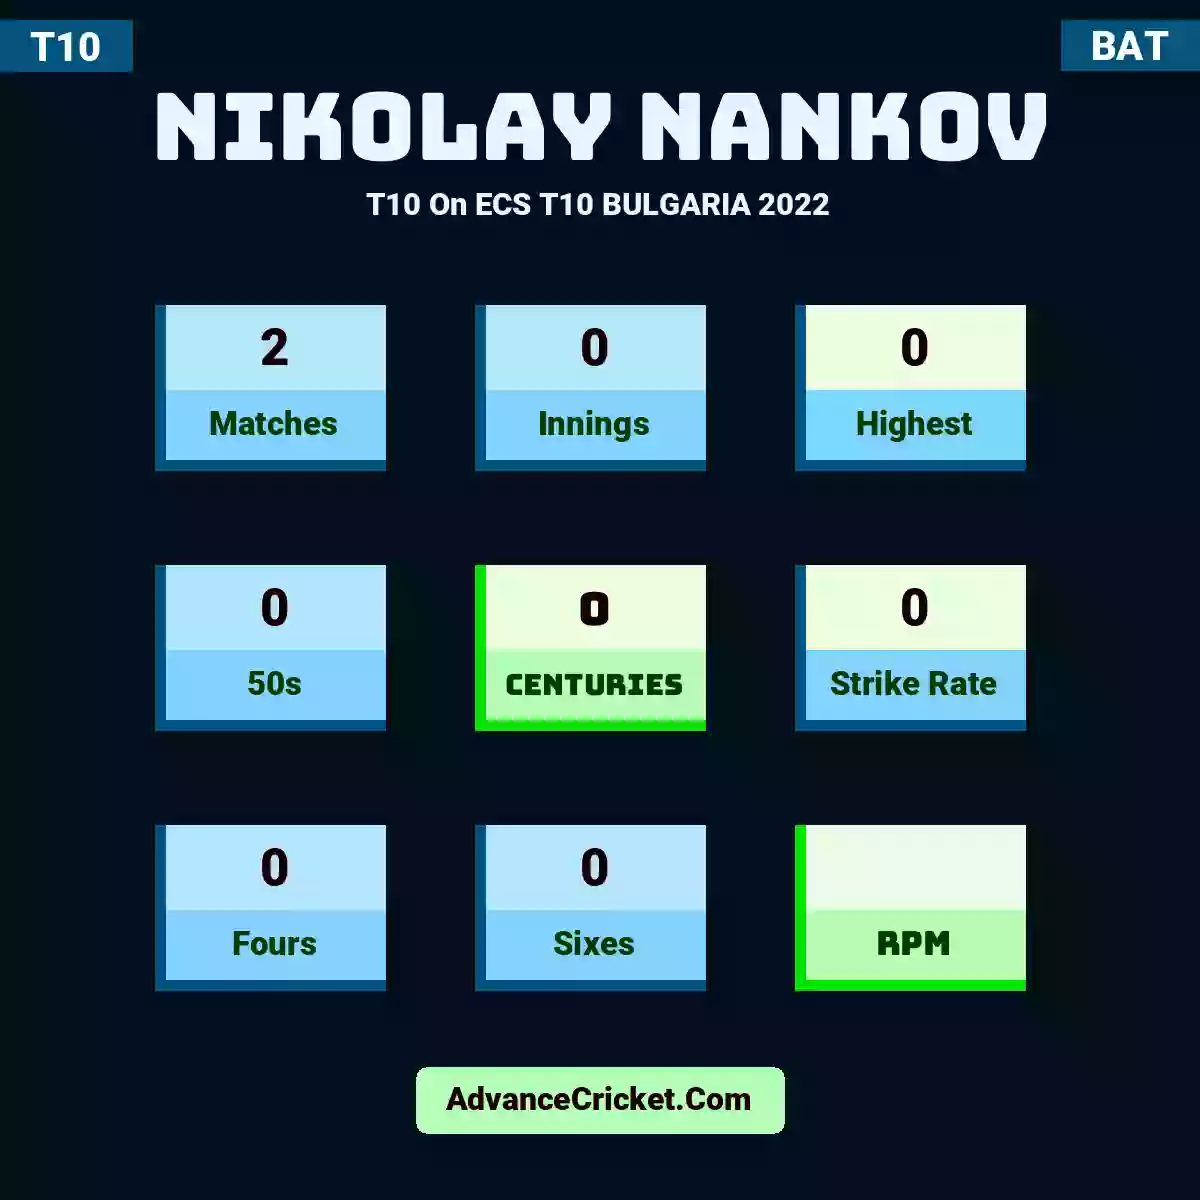 Nikolay Nankov T10  On ECS T10 BULGARIA 2022, Nikolay Nankov played 2 matches, scored 0 runs as highest, 0 half-centuries, and 0 centuries, with a strike rate of 0. N.Nankov hit 0 fours and 0 sixes.